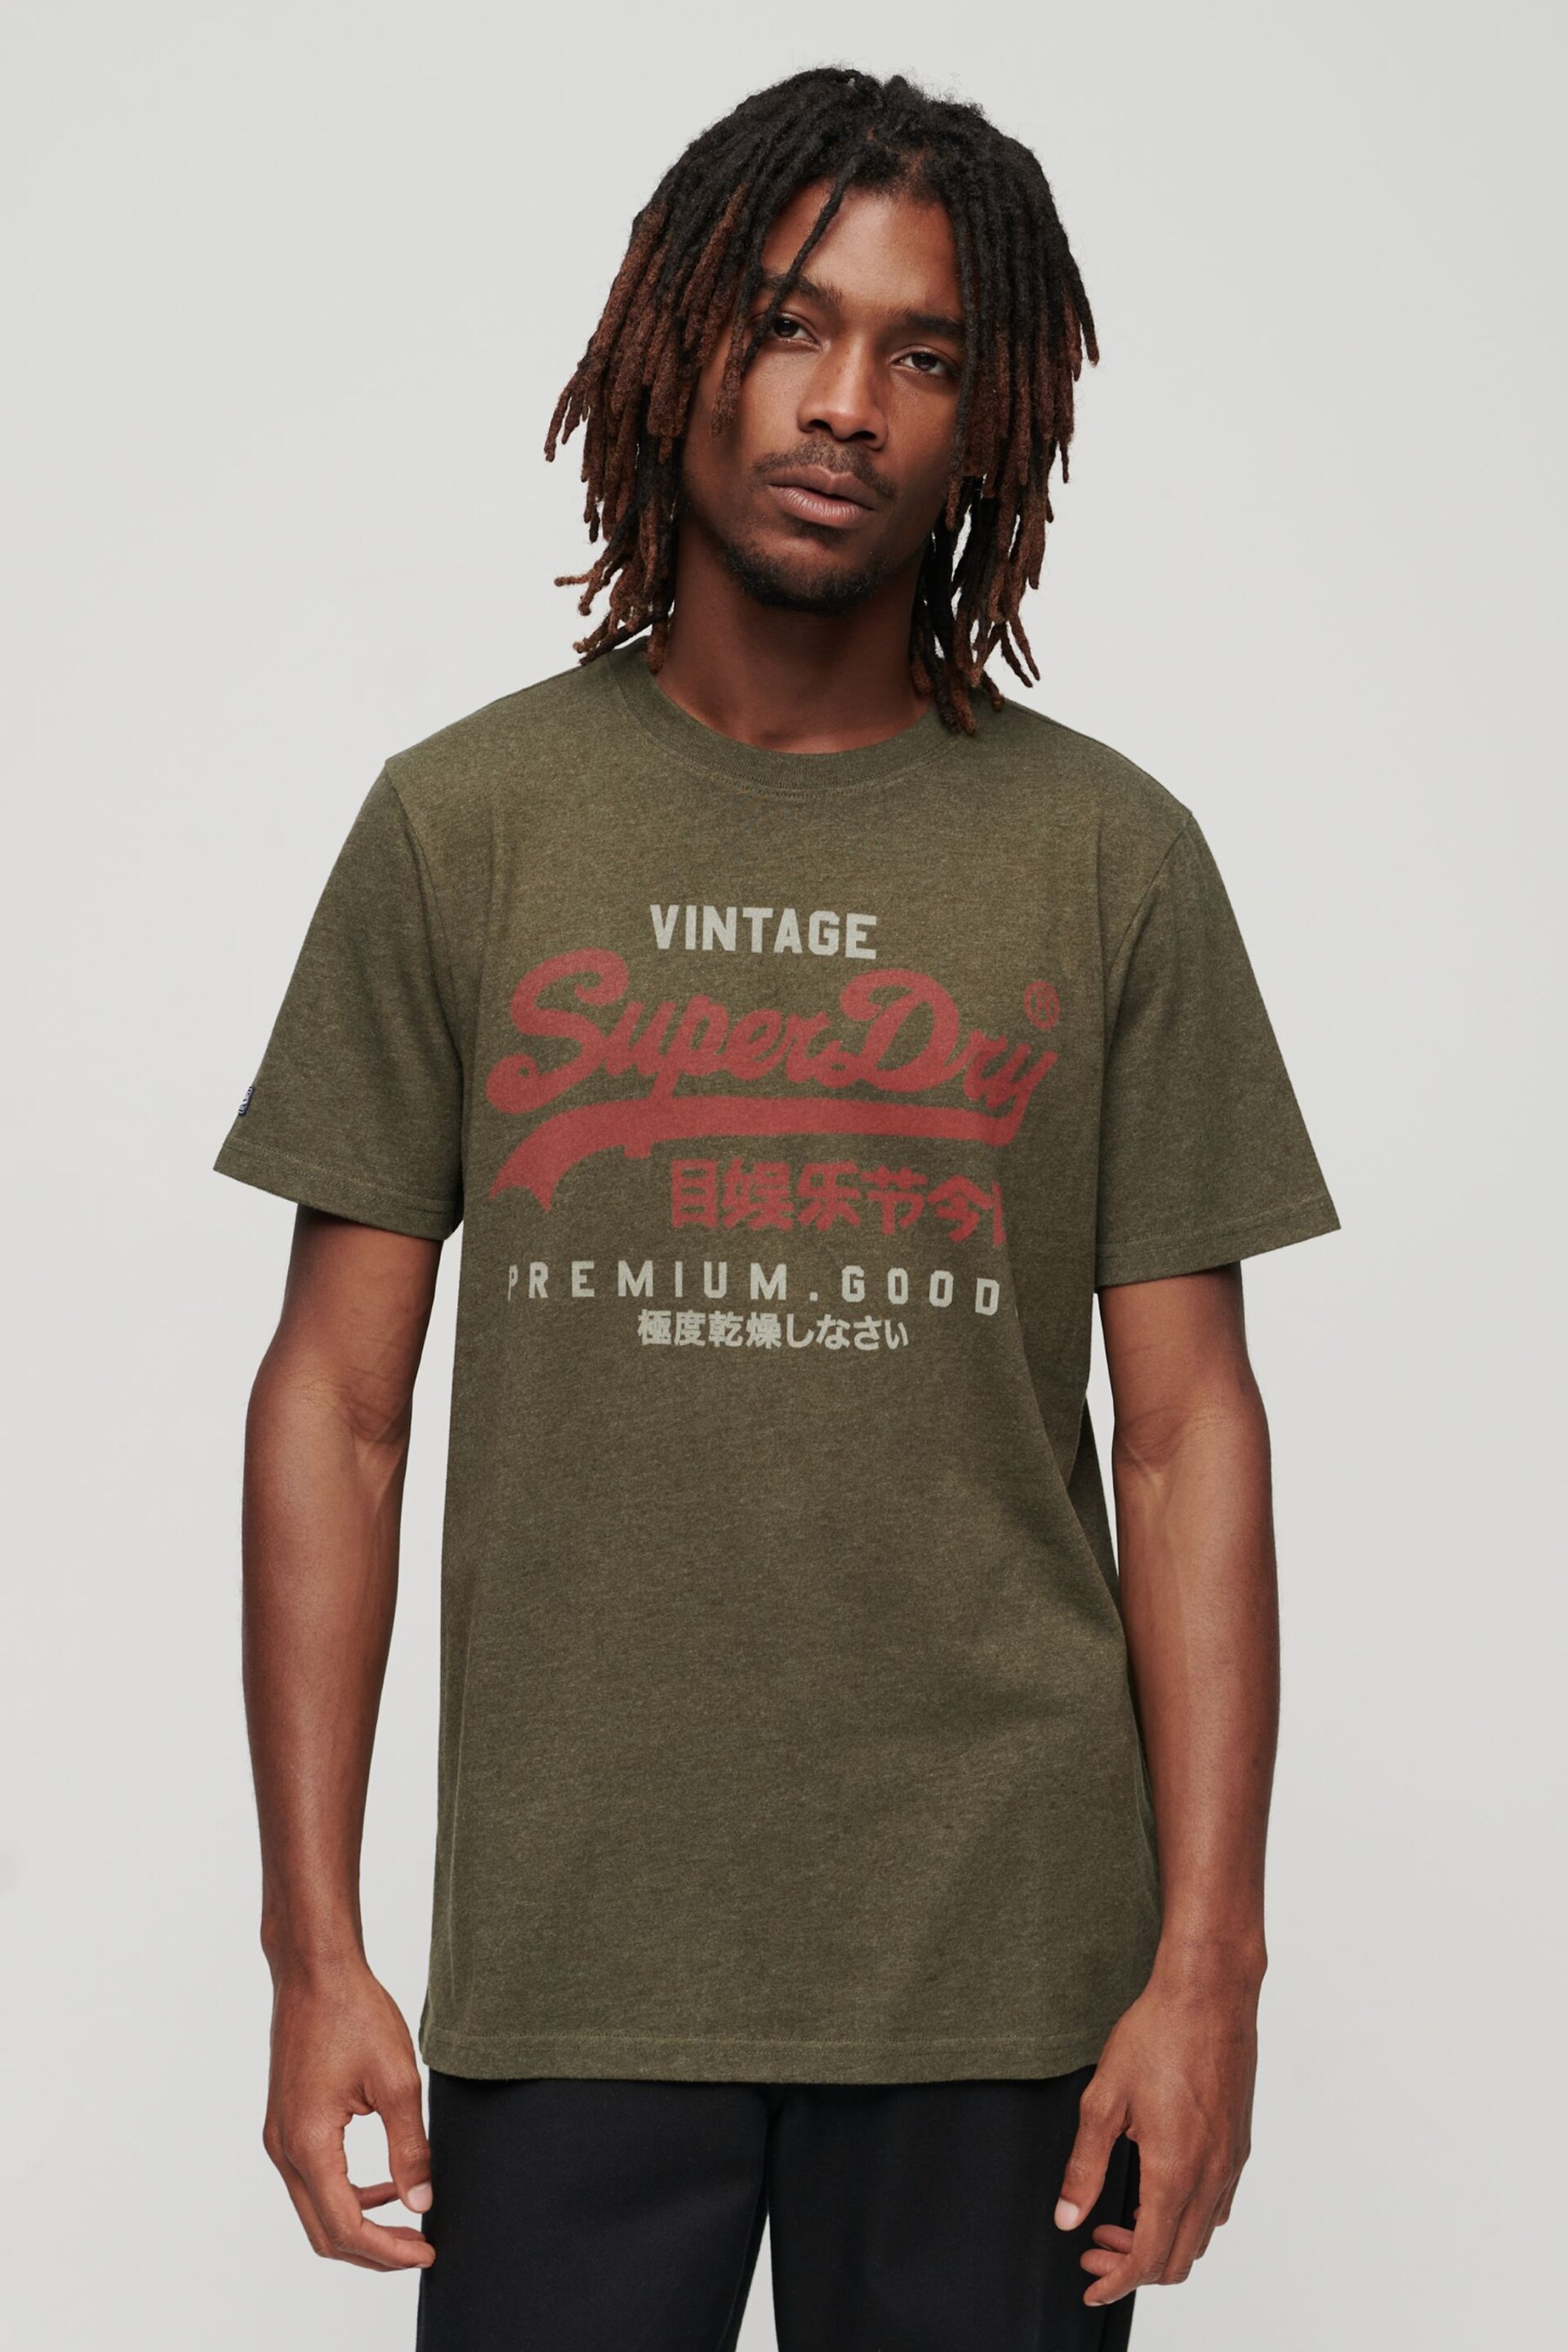 Superdry Green Vintage Logo Premium Goods T-Shirt - Image 1 of 3